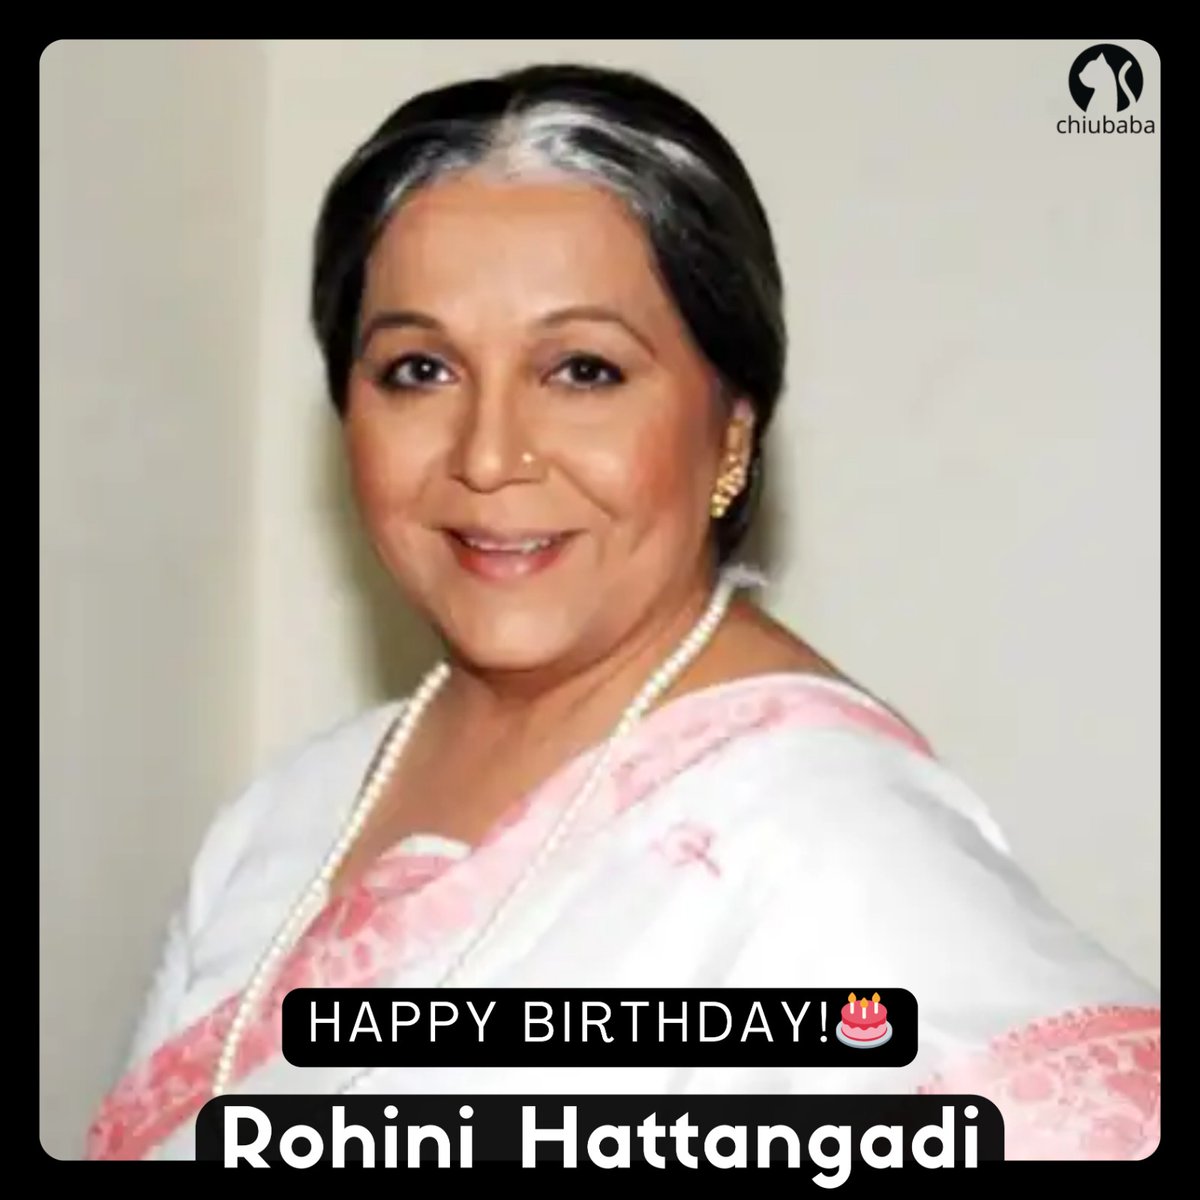 Happy Birthday, Rohini Hattangadi! 🎉🎂 Your talent graces the silver screen, captivating audiences worldwide. @rohinihattangady #HappyBirthdayRohiniHattangadi #BollywoodIcon #CelebratingTalent #LegendaryActress #chiubaba